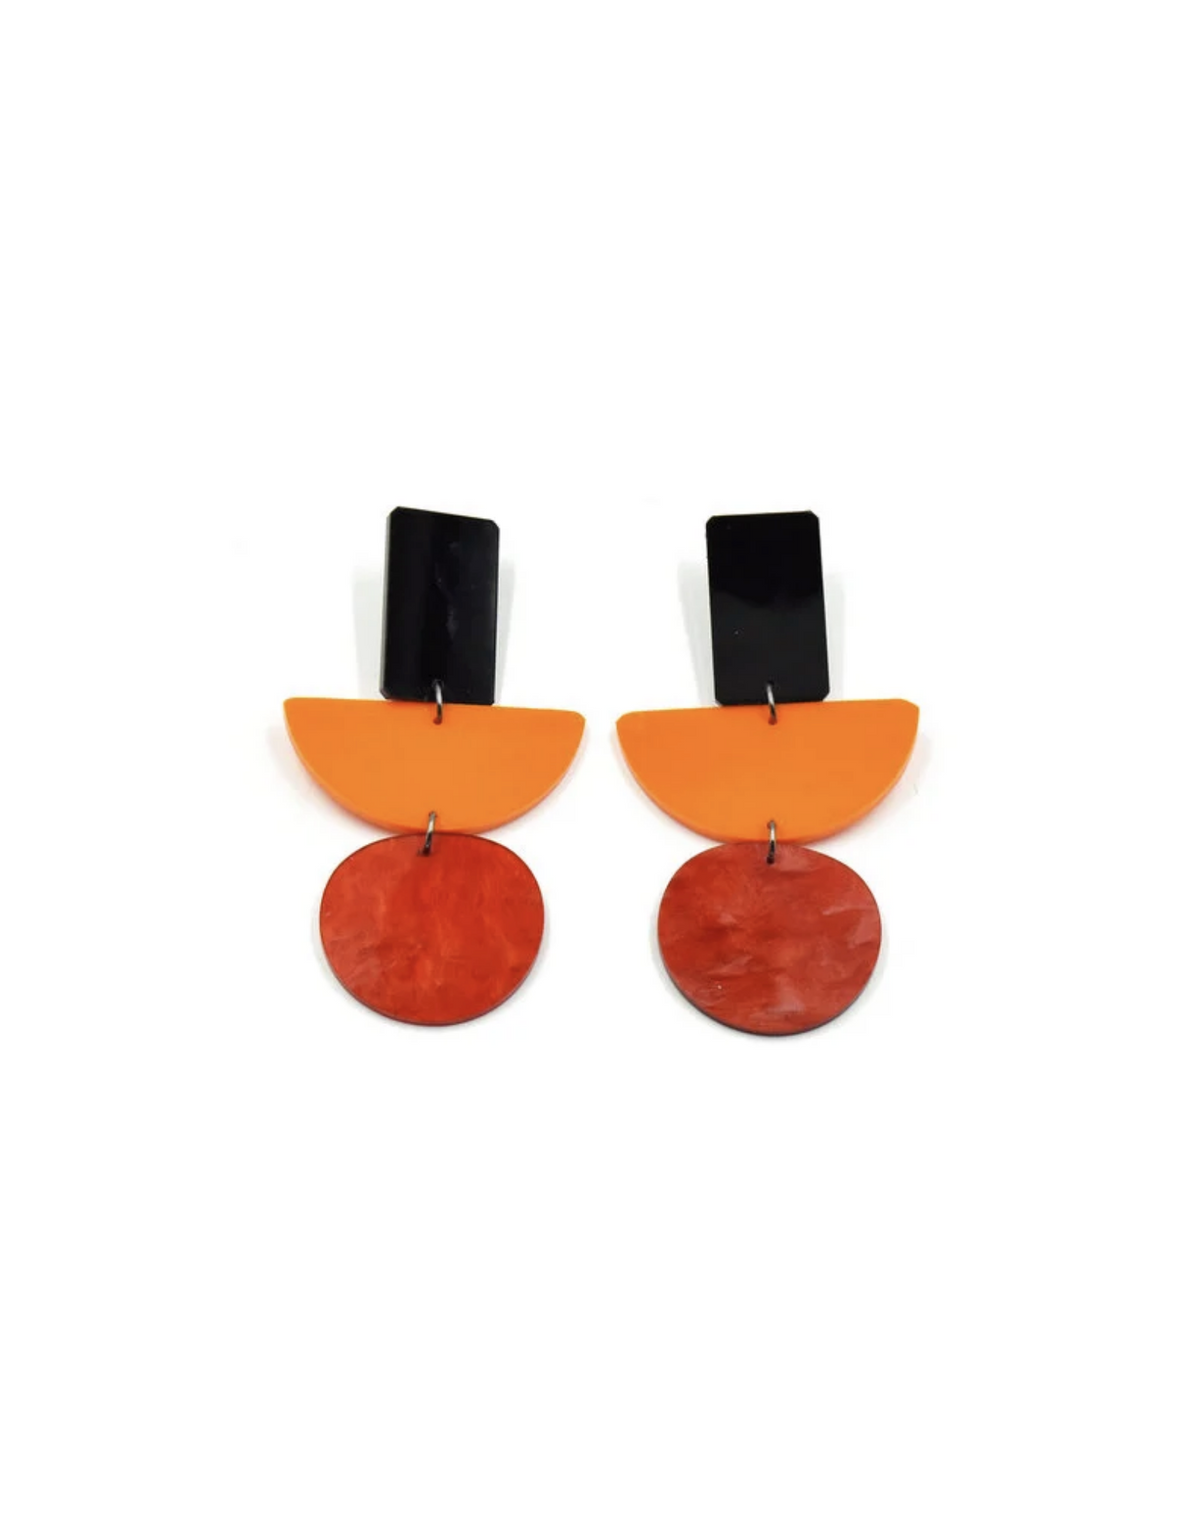 CB456 - Half Moon earrings in Red / Orange